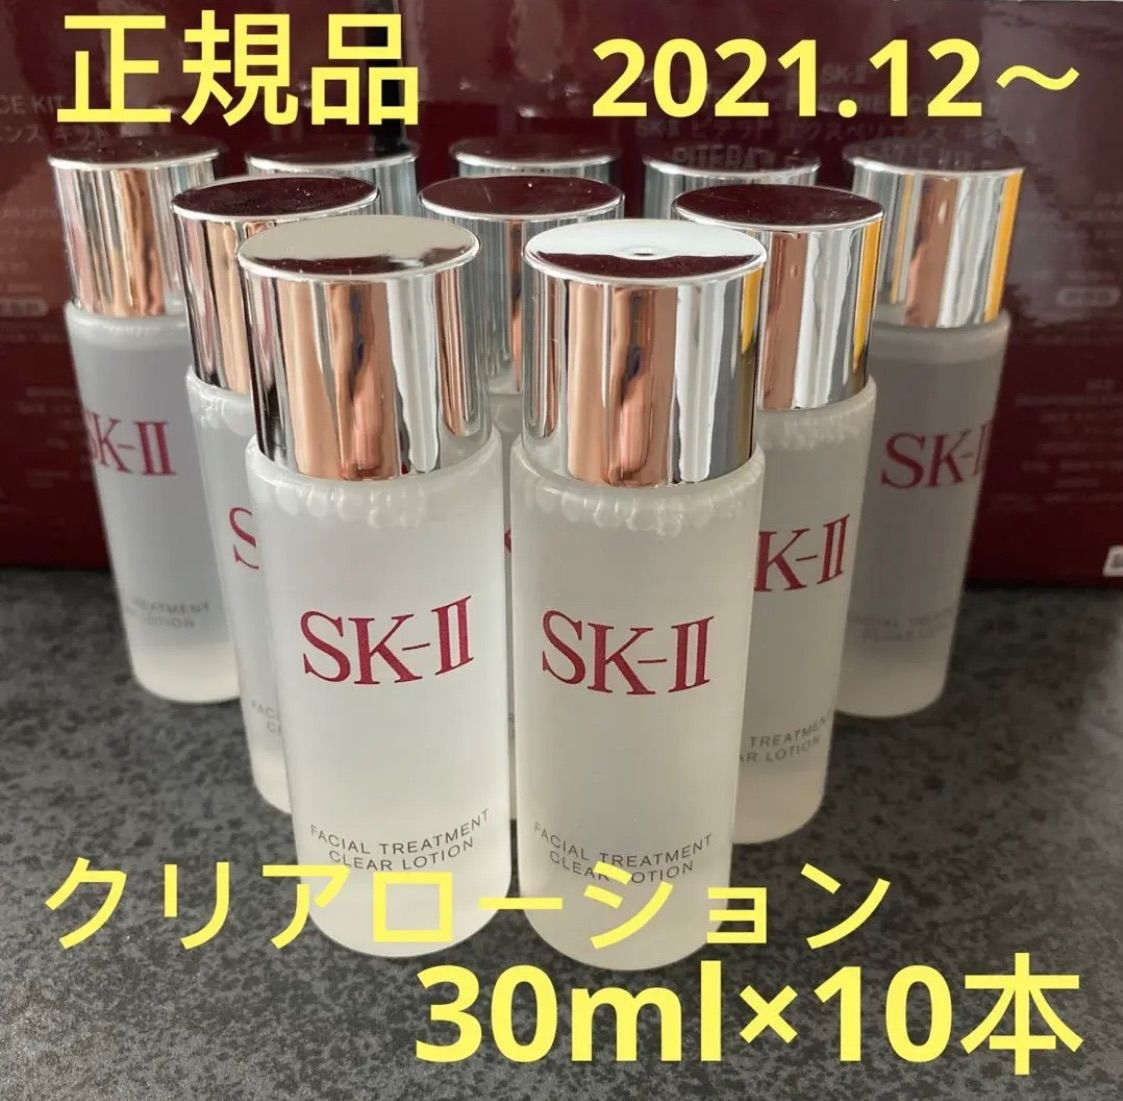 SK-IIフェイシャルトリートメントクリアローション30ml - 化粧水